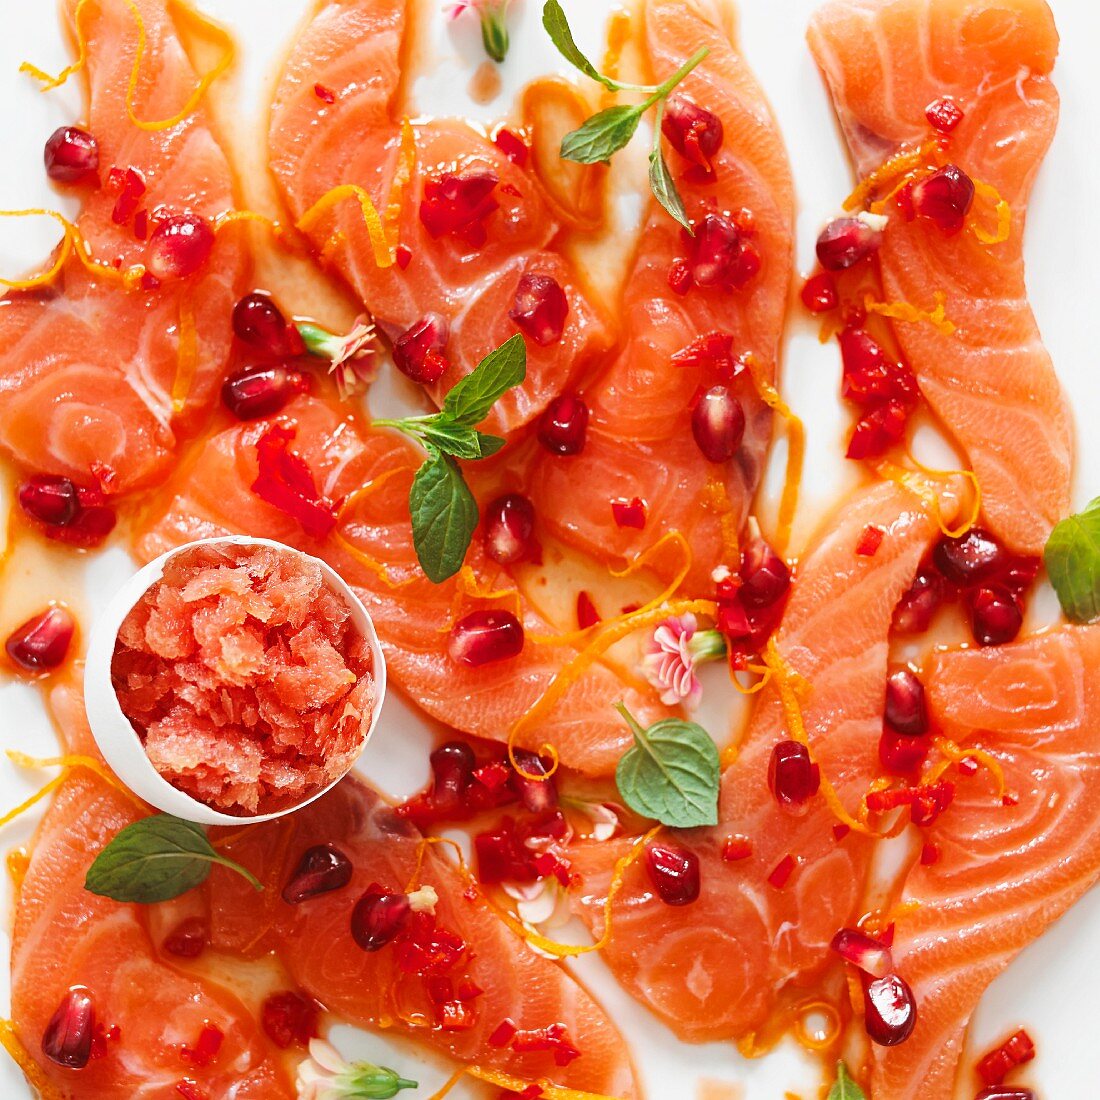 Salmon sashimi with pomegranate seeds and blood orange granita for Easter